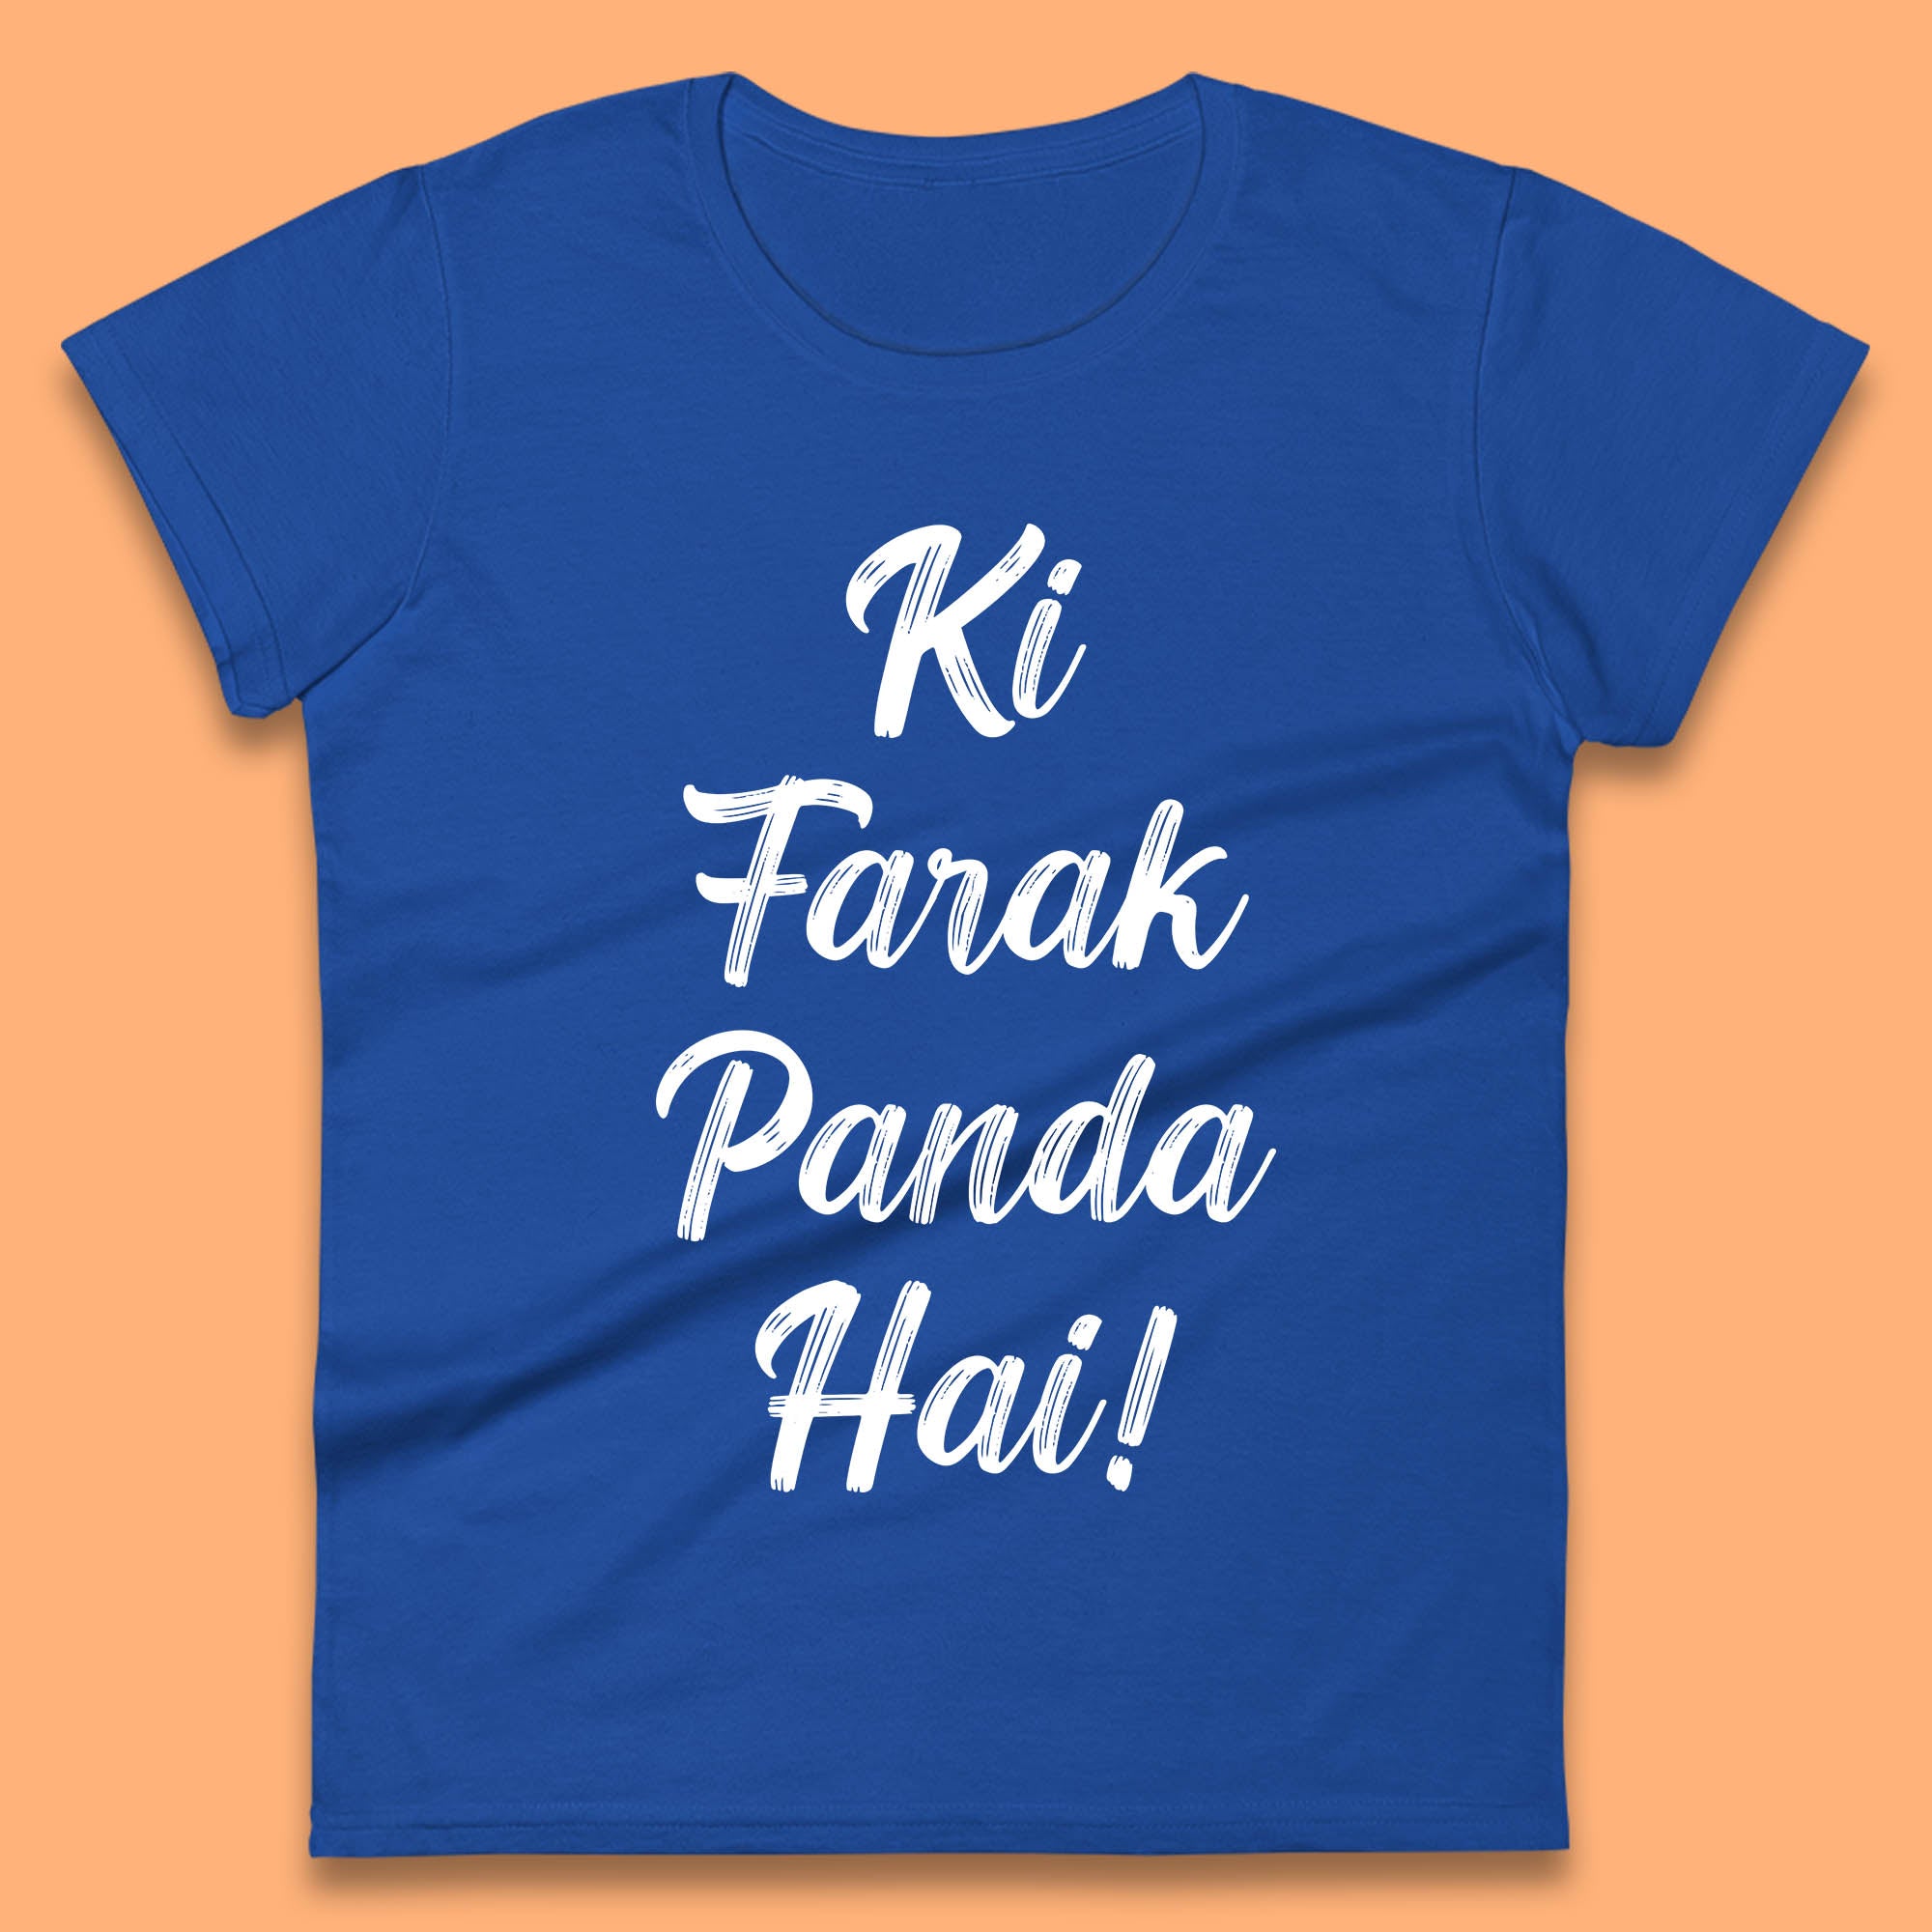 Ki Farak Panda Hai Funny Humorous Novelty Panda Parody Gift Womens Tee Top